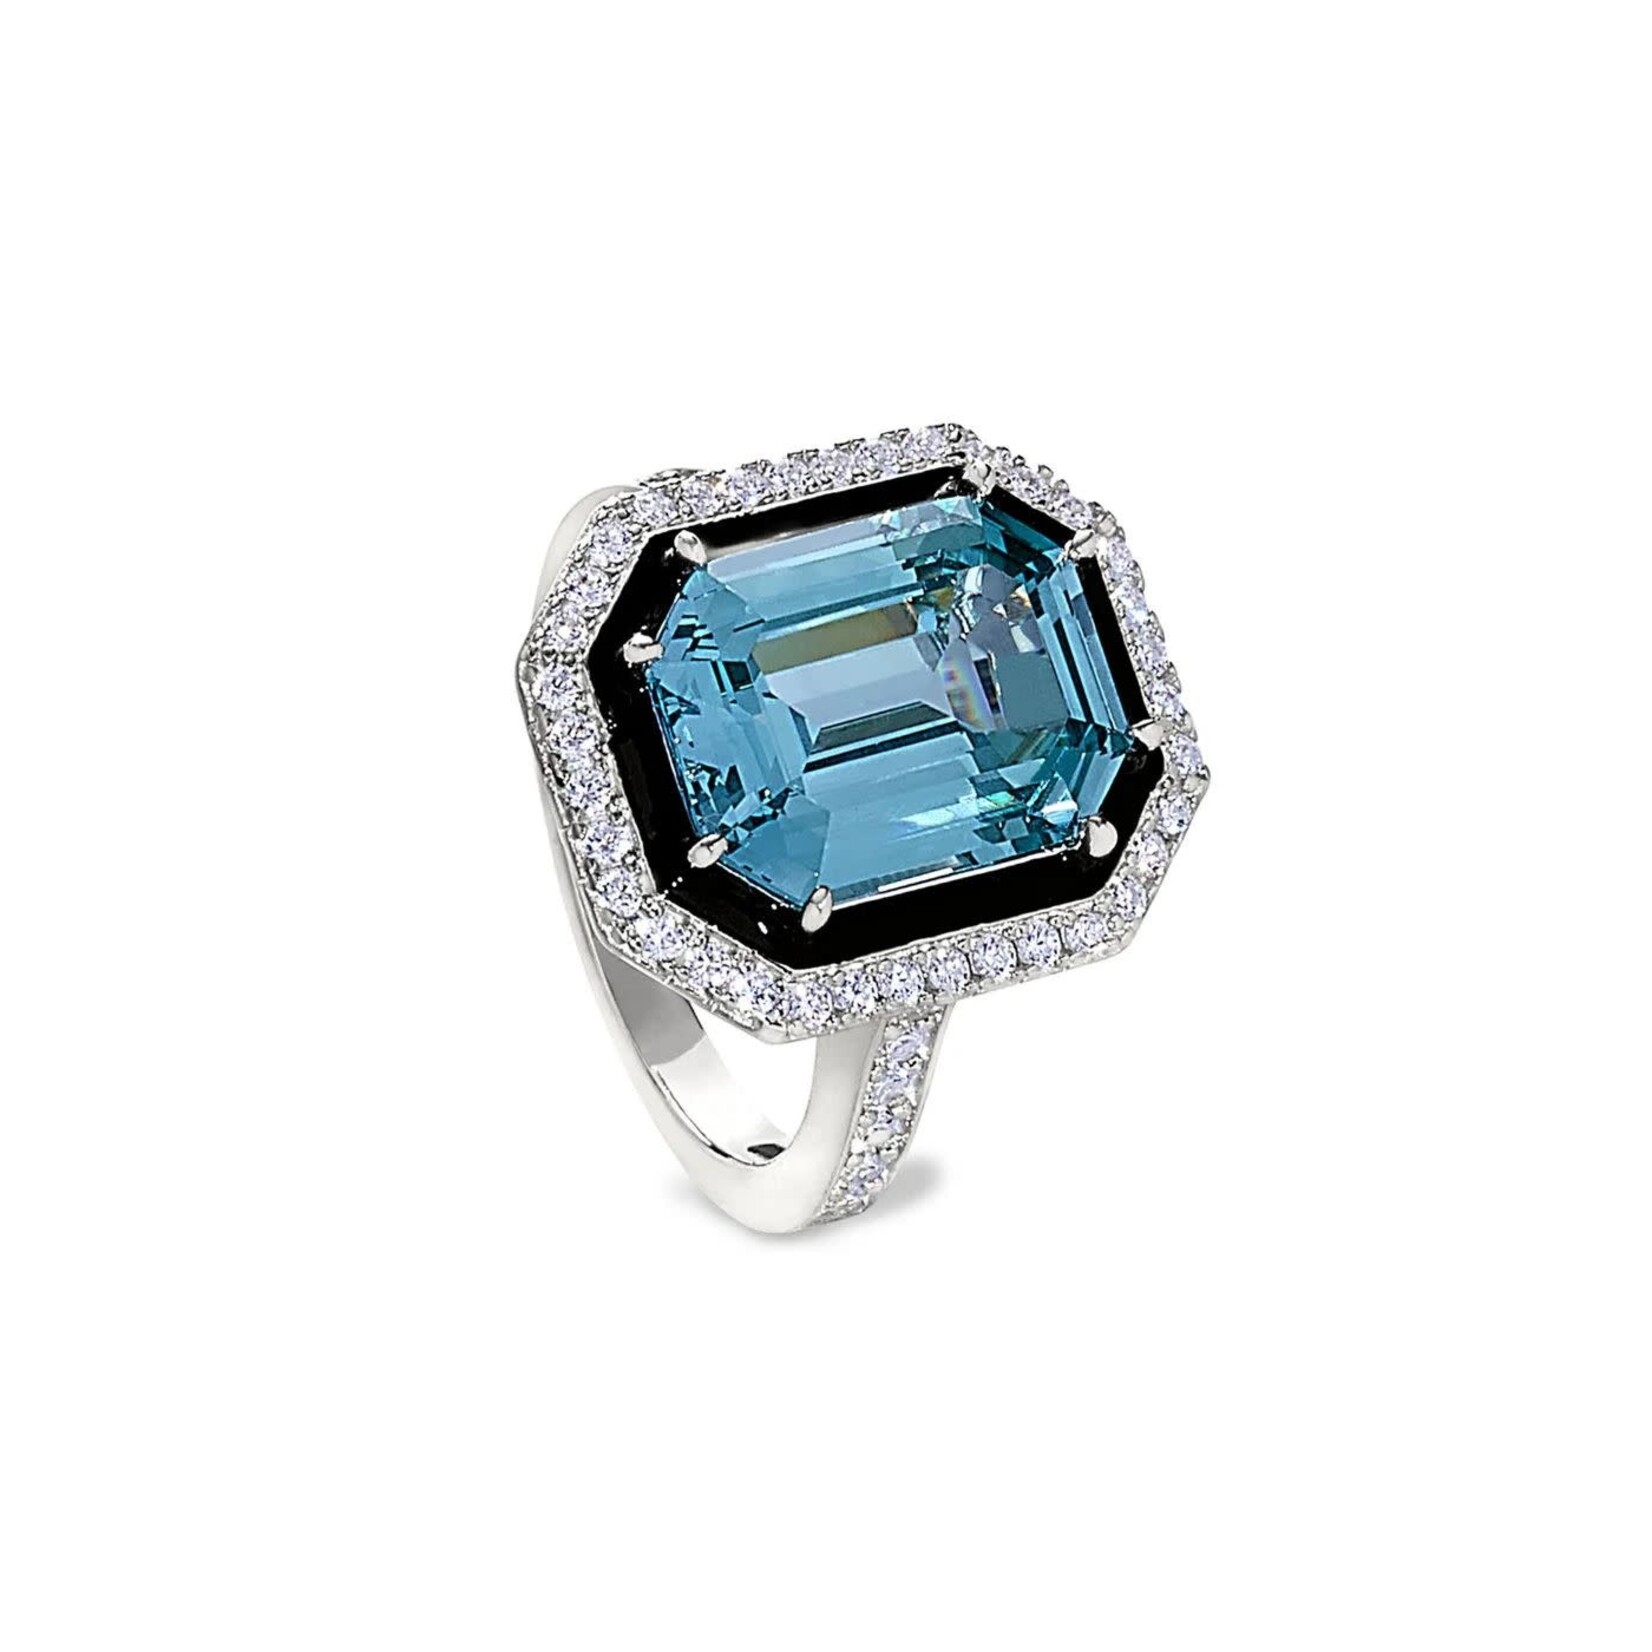 KELLY WATERS INC. Sterling Silver Black Enamel & Aqua Spinel w/Simulated Diamonds Ring